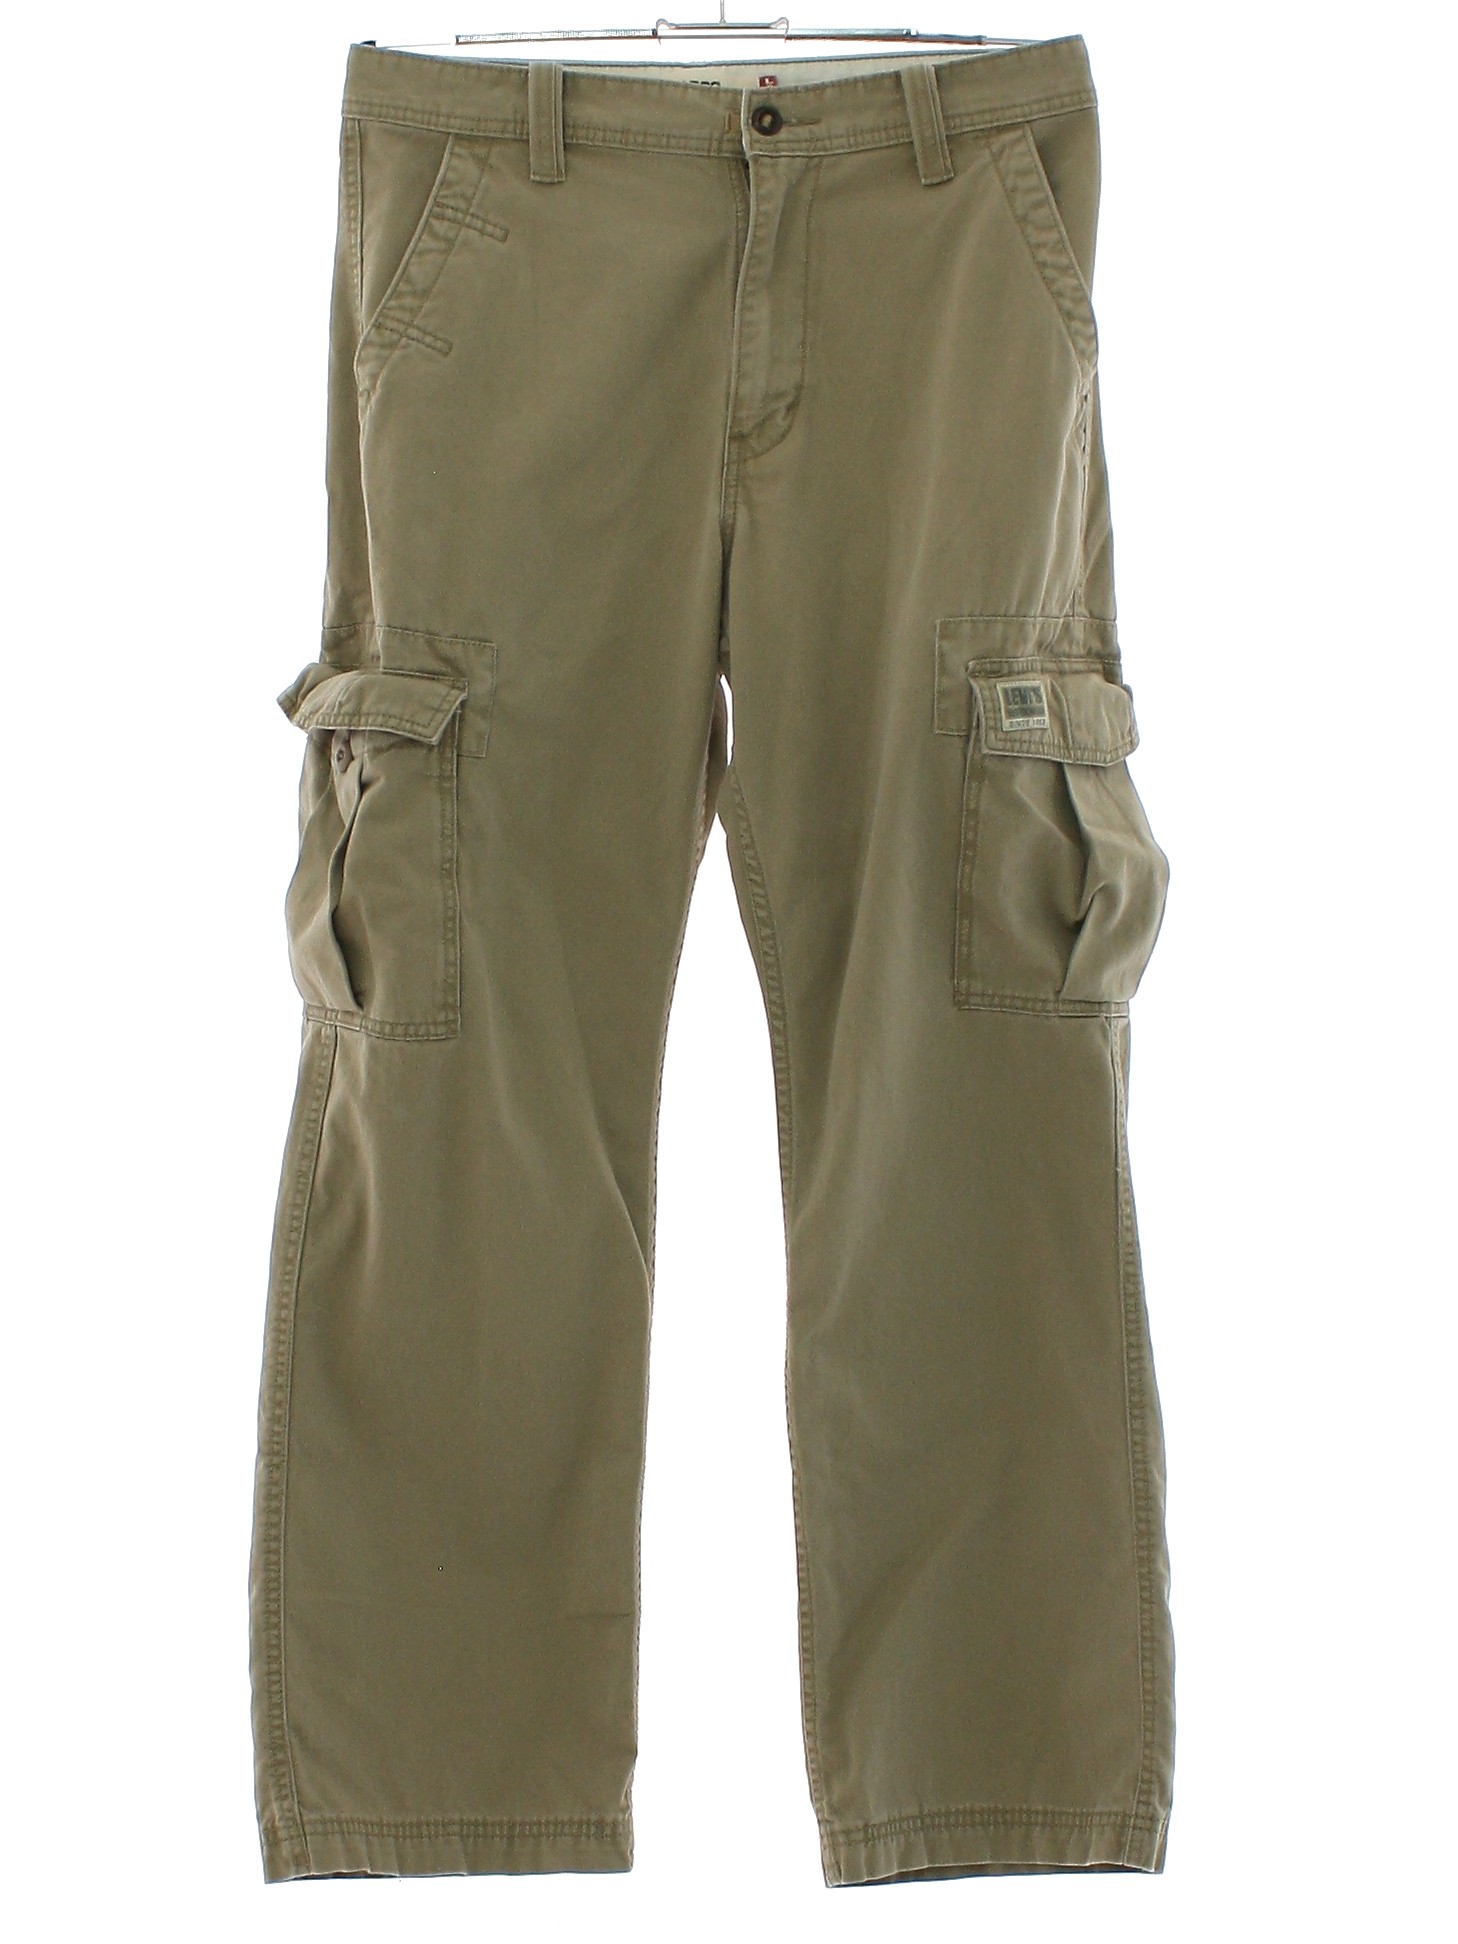 Tan Bellows Pockets Cargo Pants